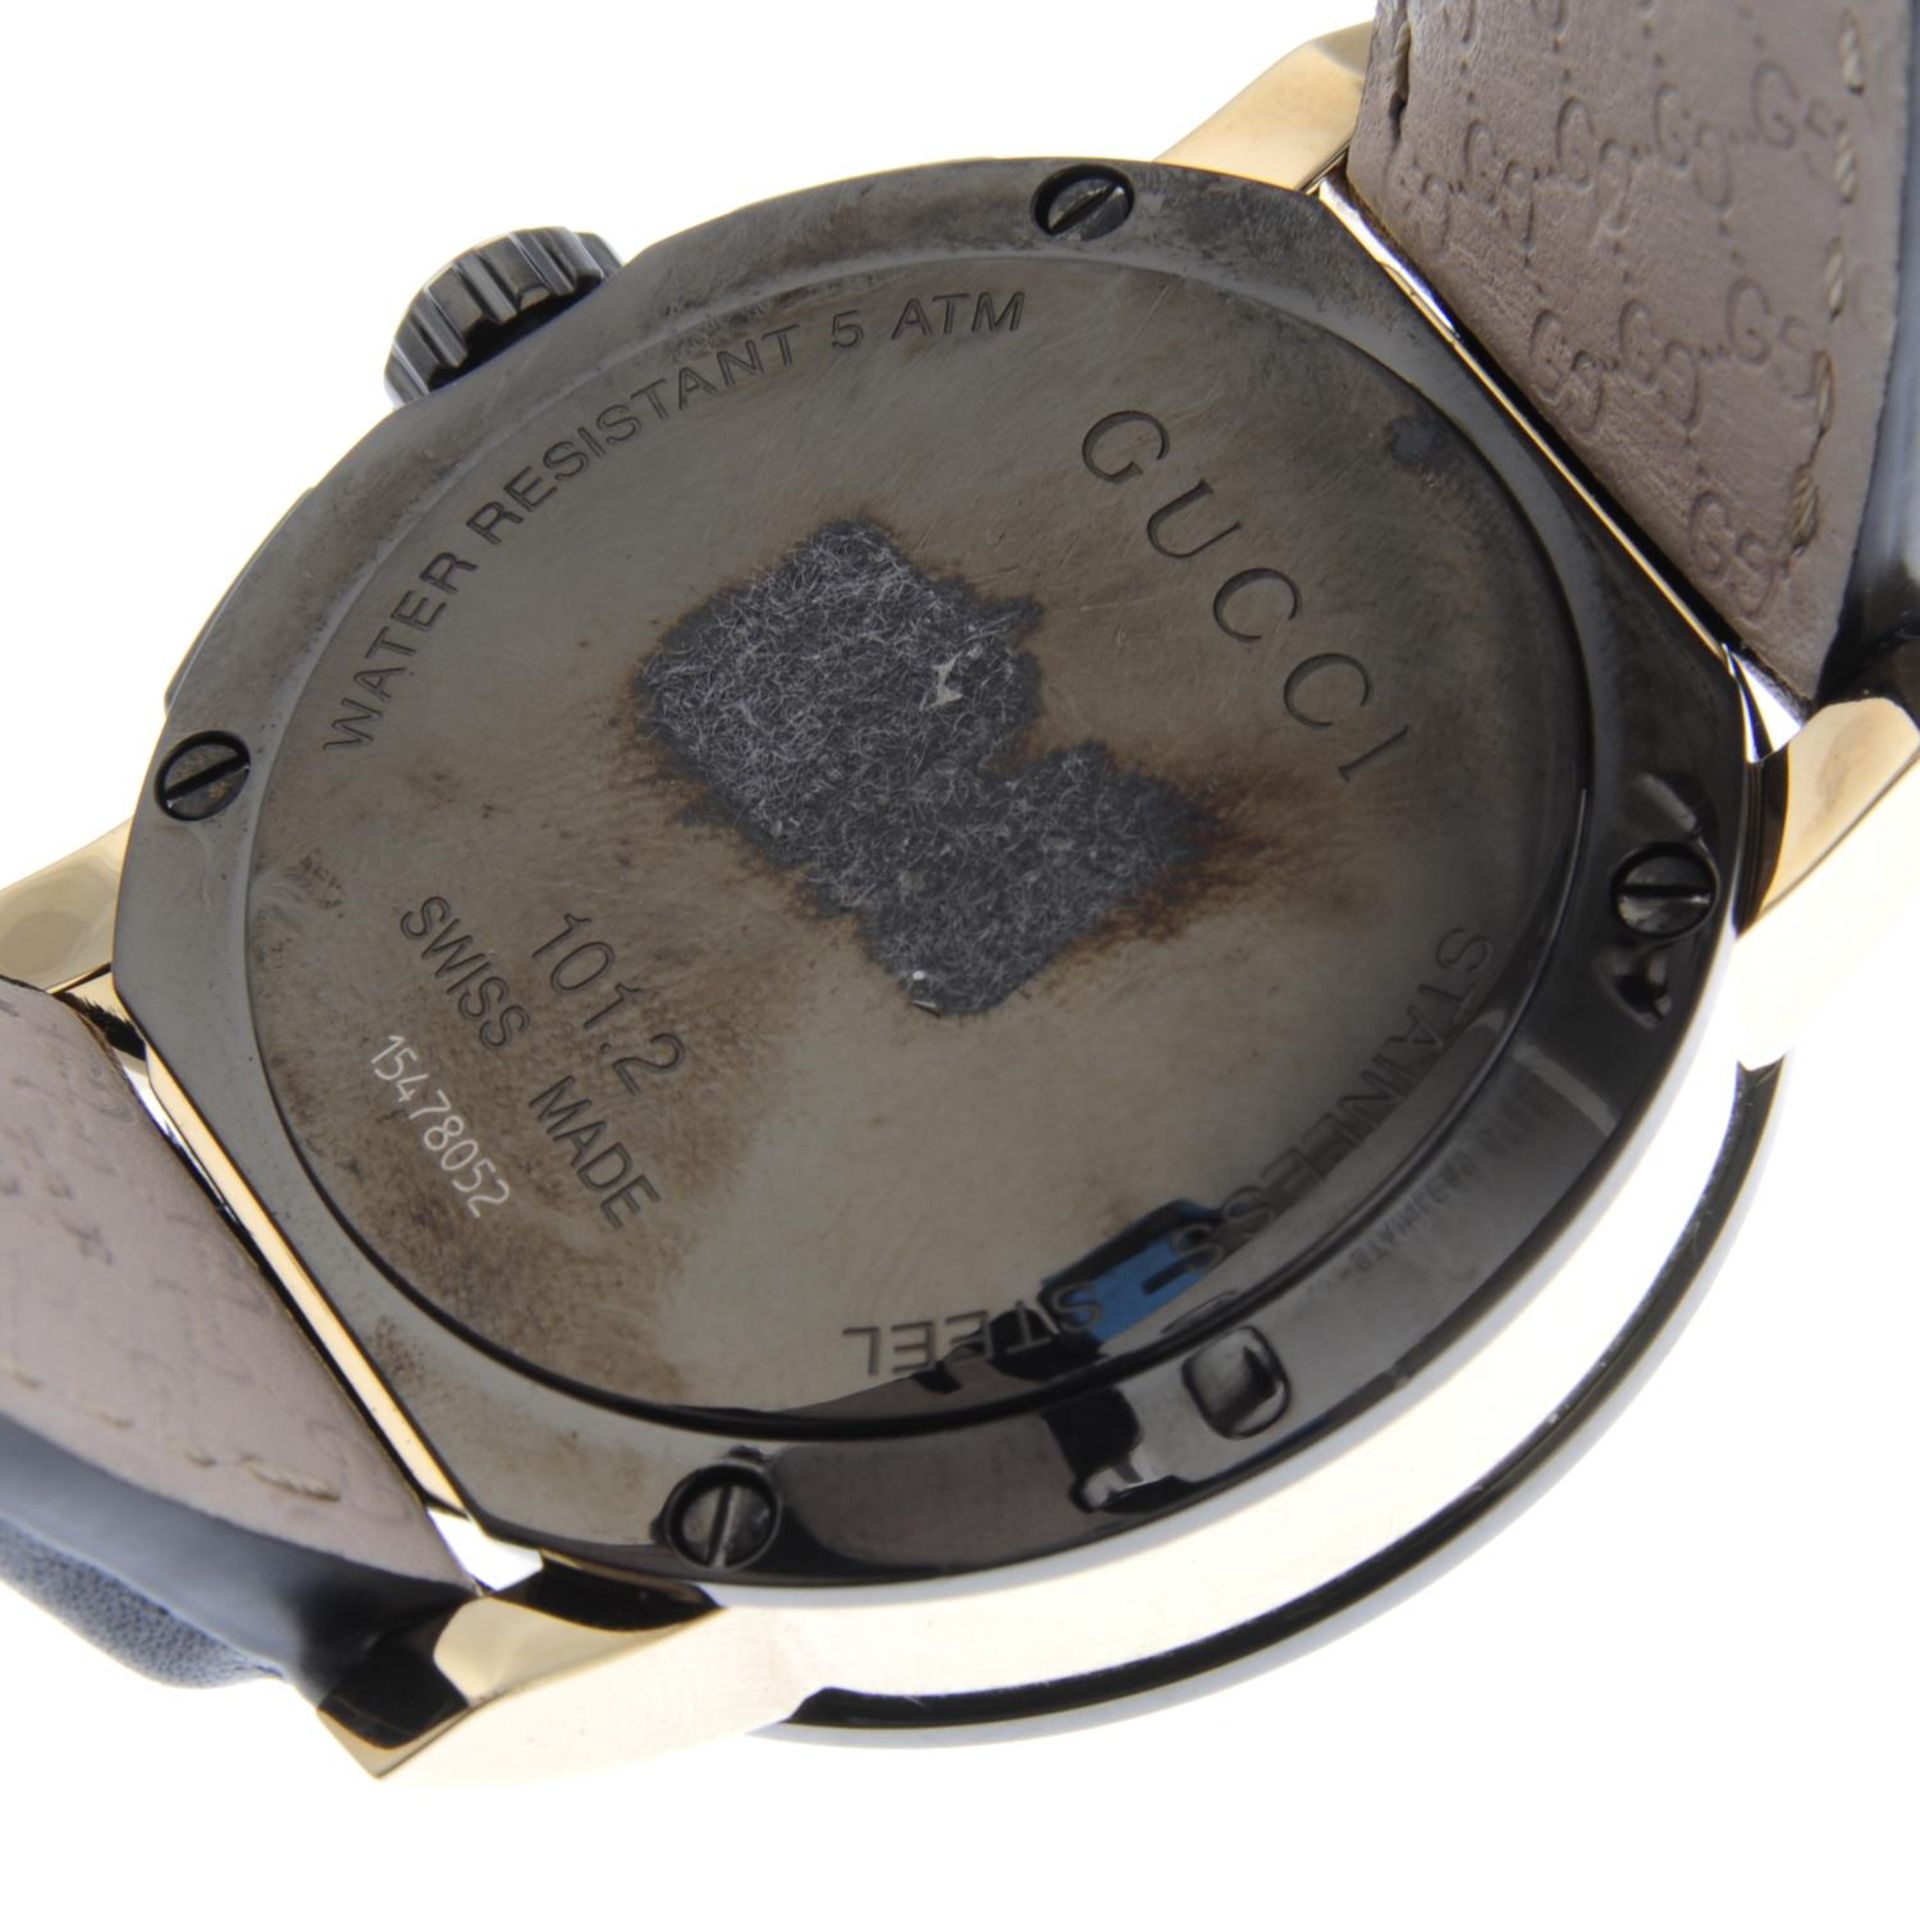 GUCCI - a gentleman's G-Chrono chronograph wrist watch. - Image 3 of 4